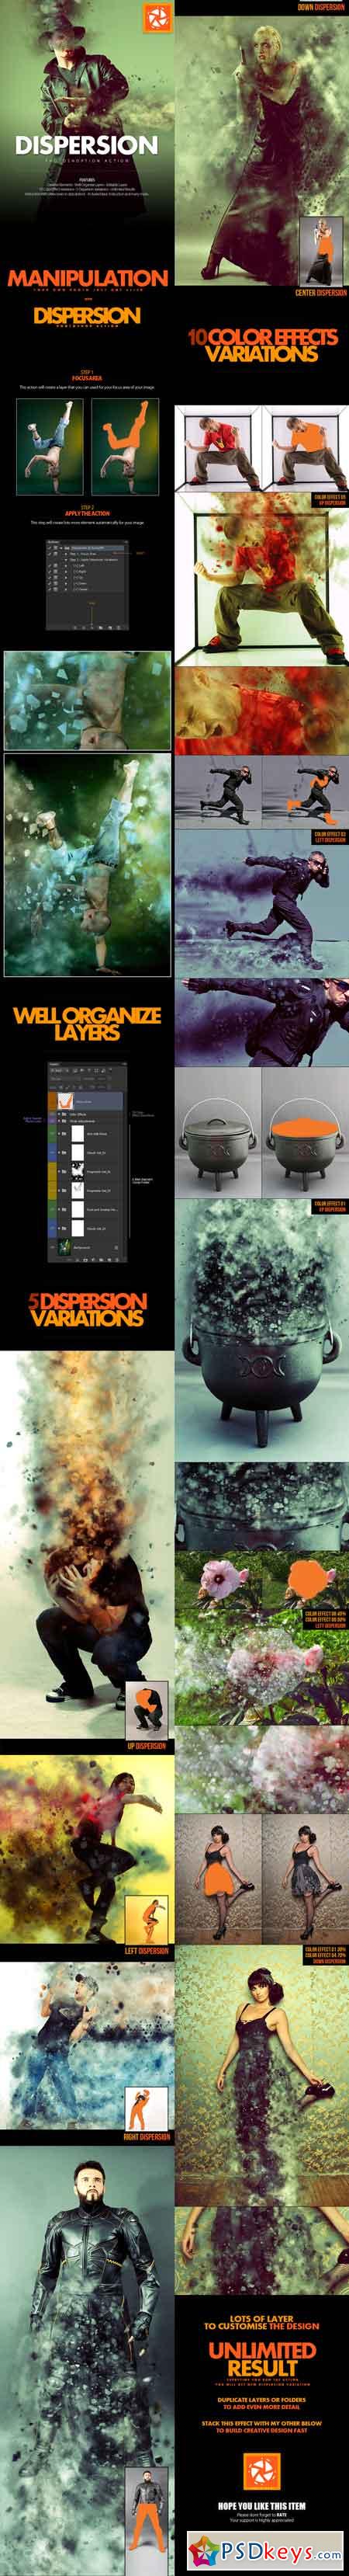 Dispersion Photoshop Action 14375715